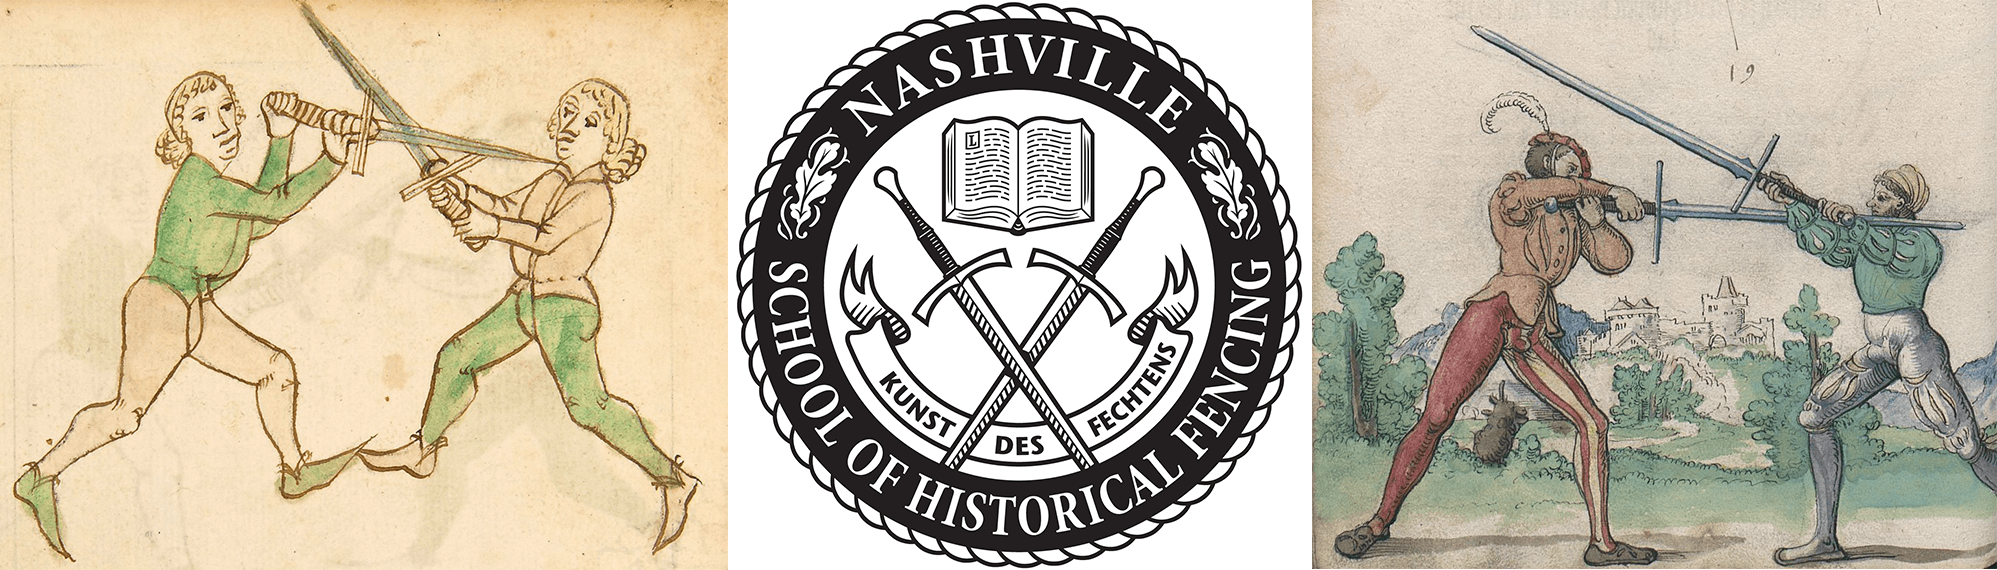 Nashville School of Historical Fencing